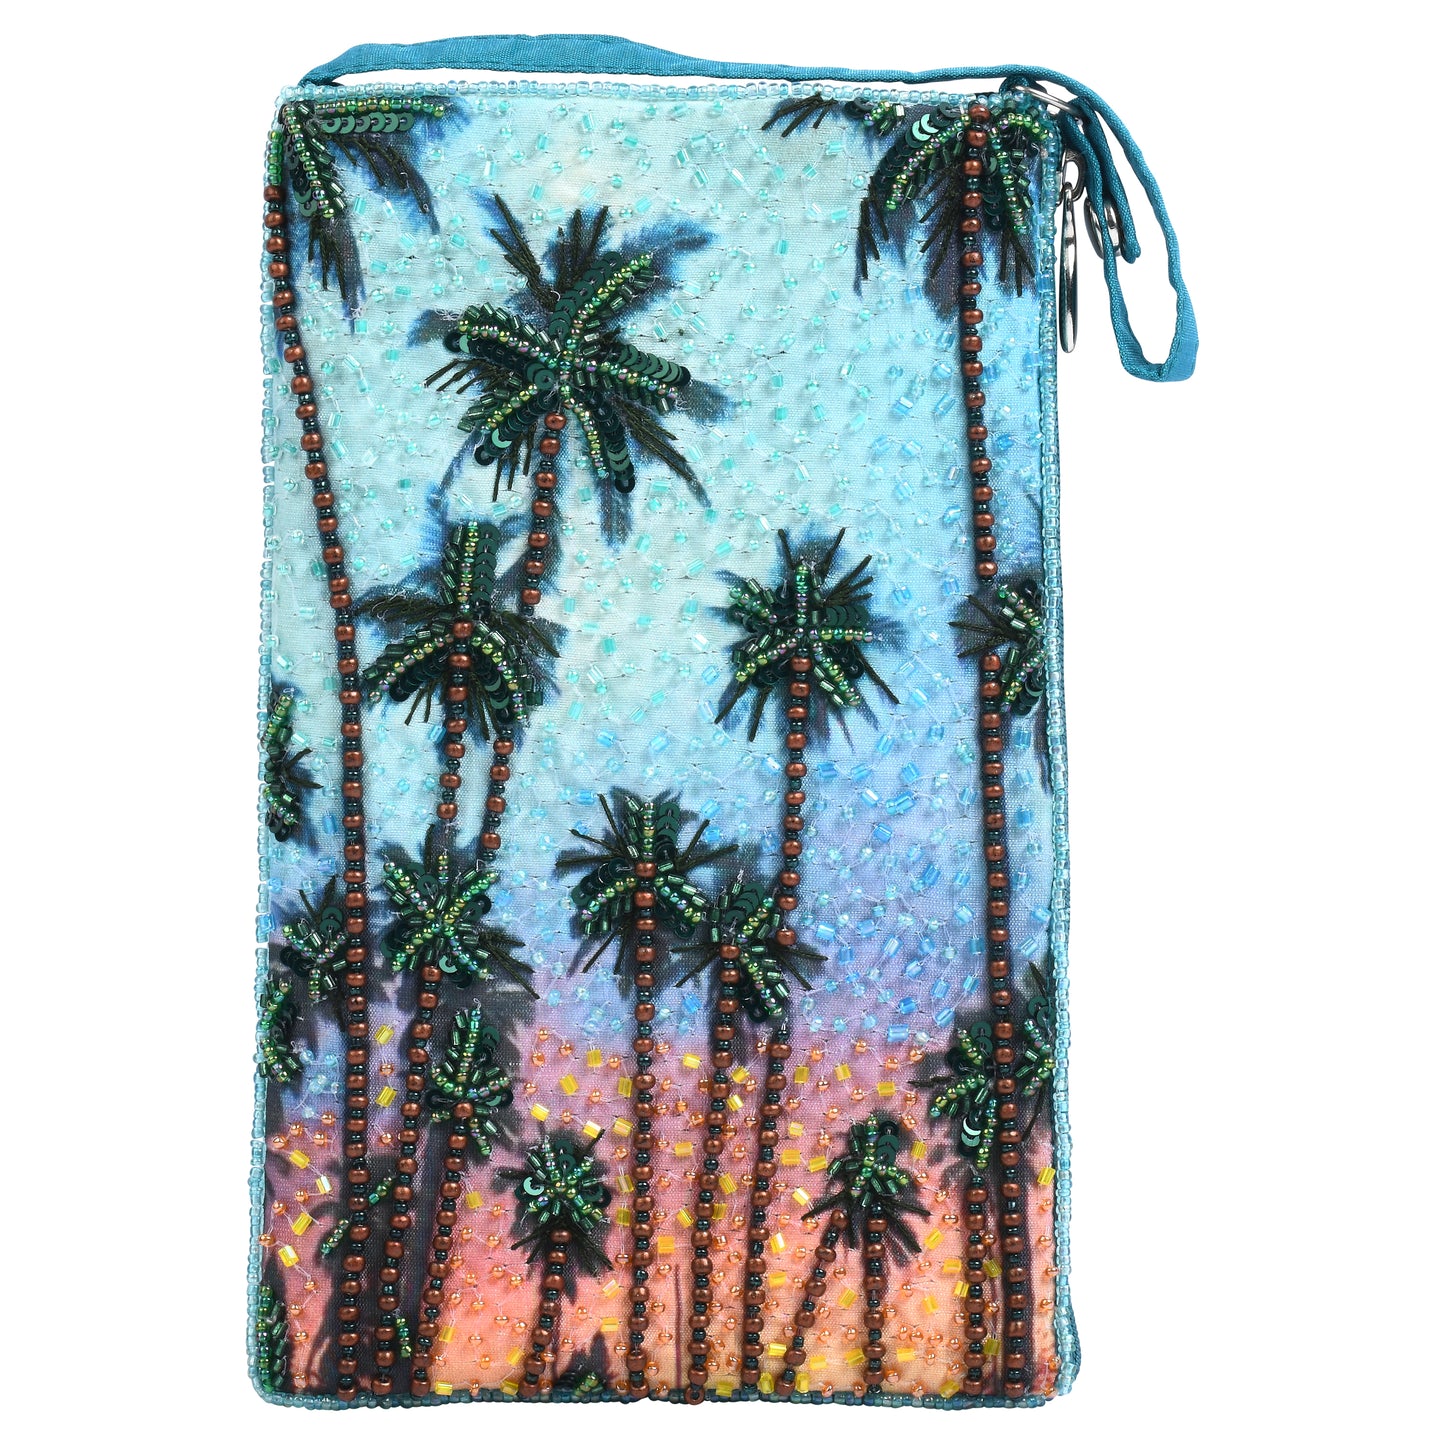 Sunset Palms Club Bag